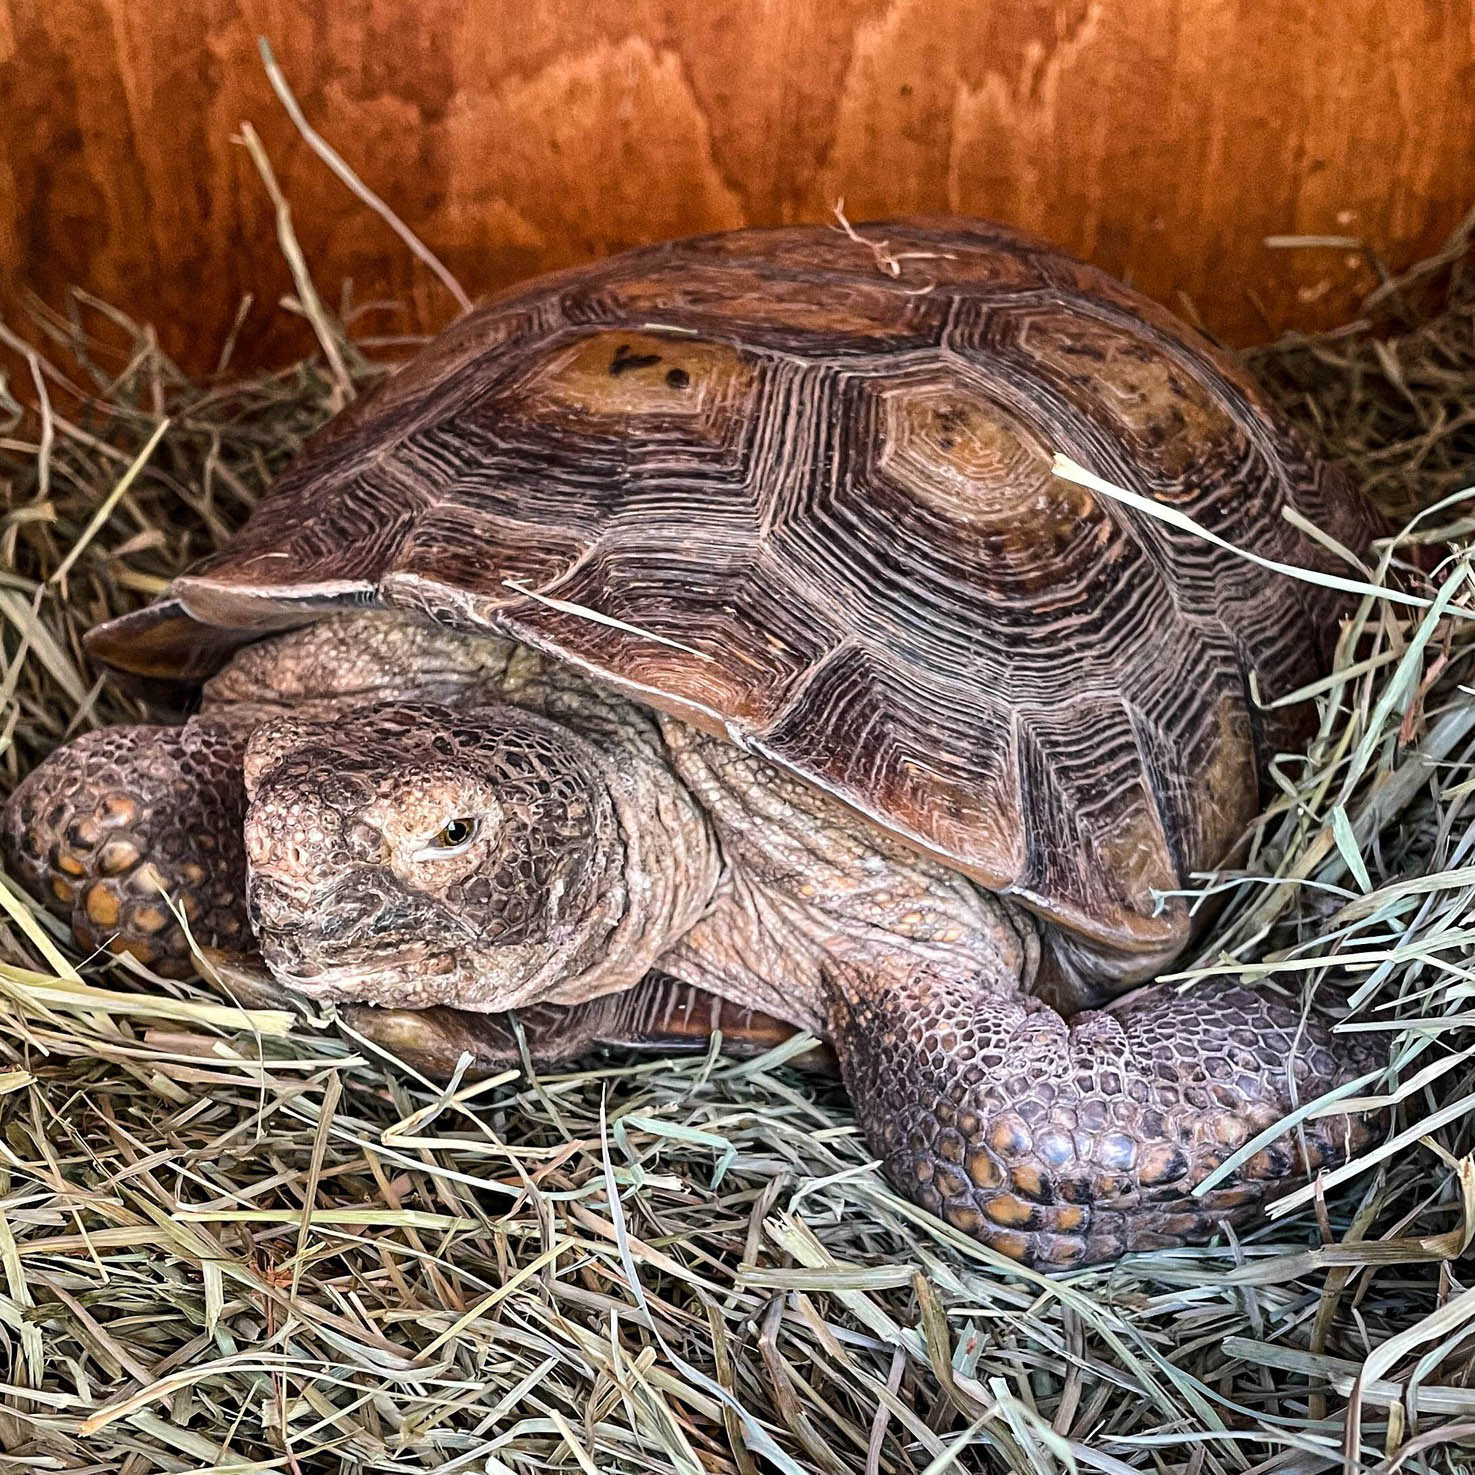 Girard - Desert Tortoise (Gopherus agassizii)